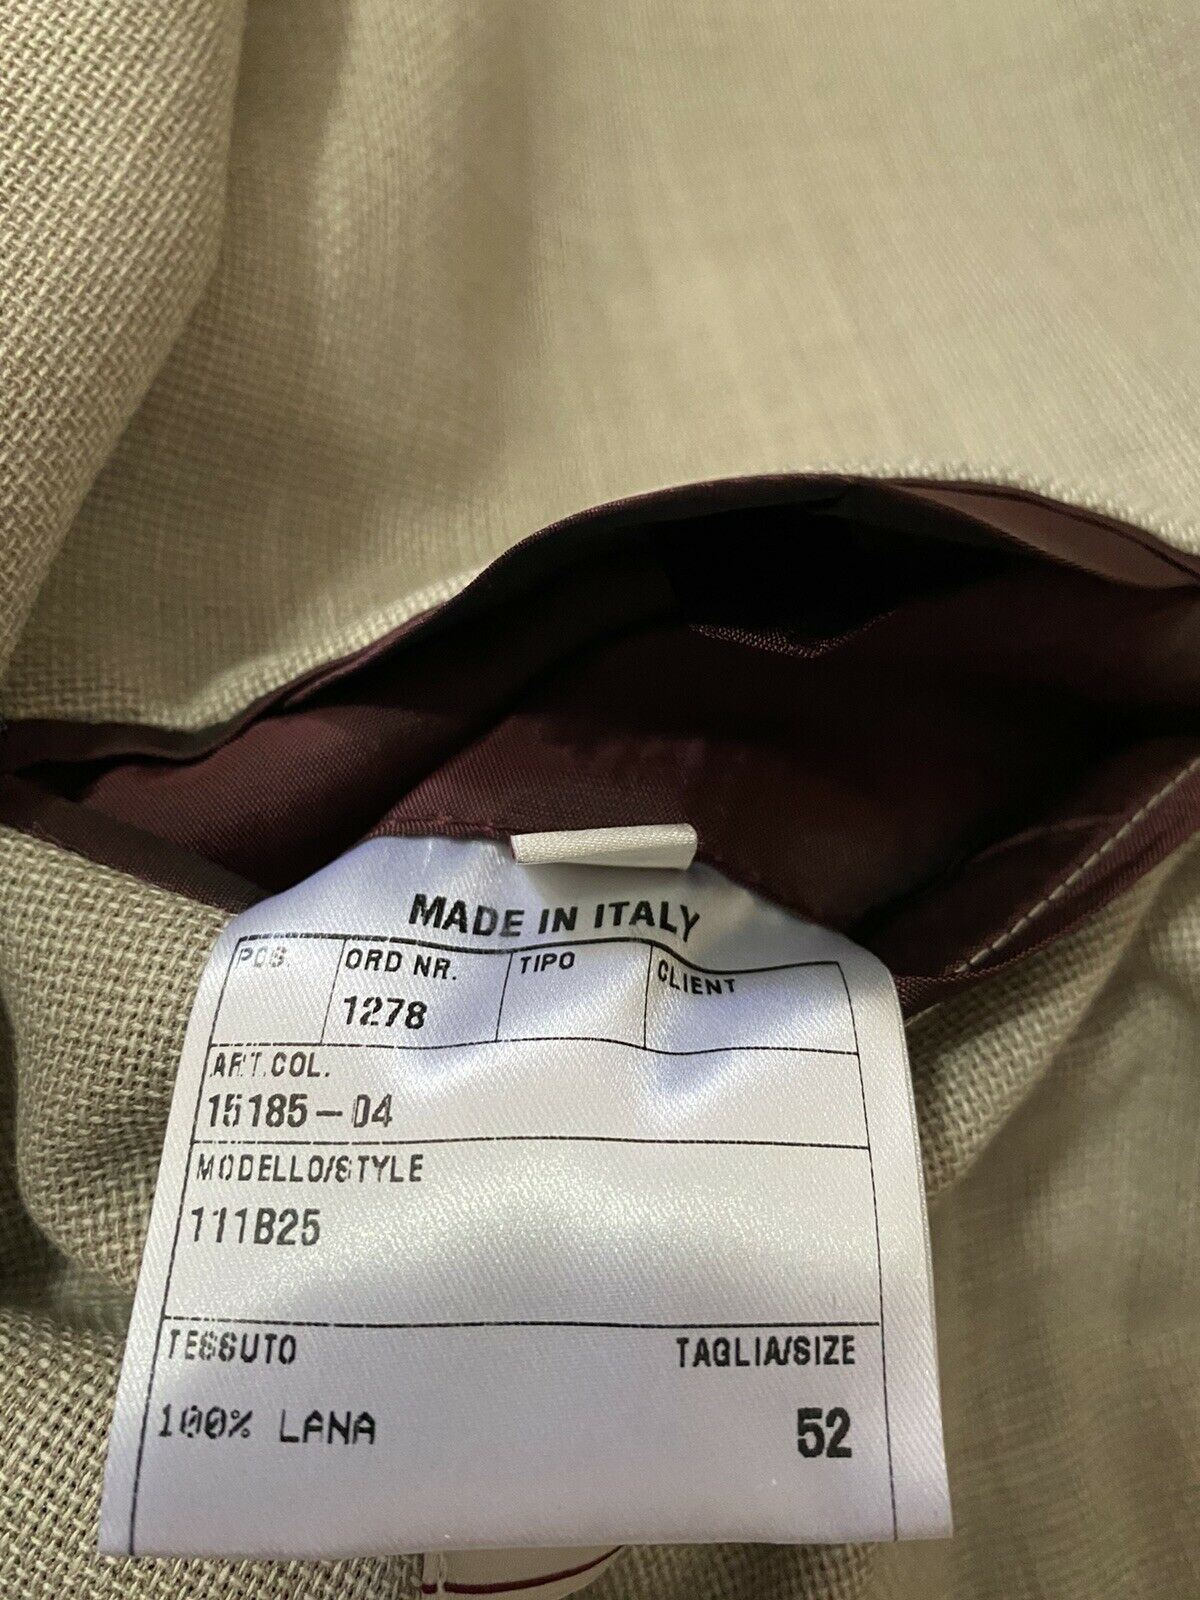 New $1595 Luciano Barbera Men Sport Coat Blazer Jacket Cream 42R US ( 52R Eu )